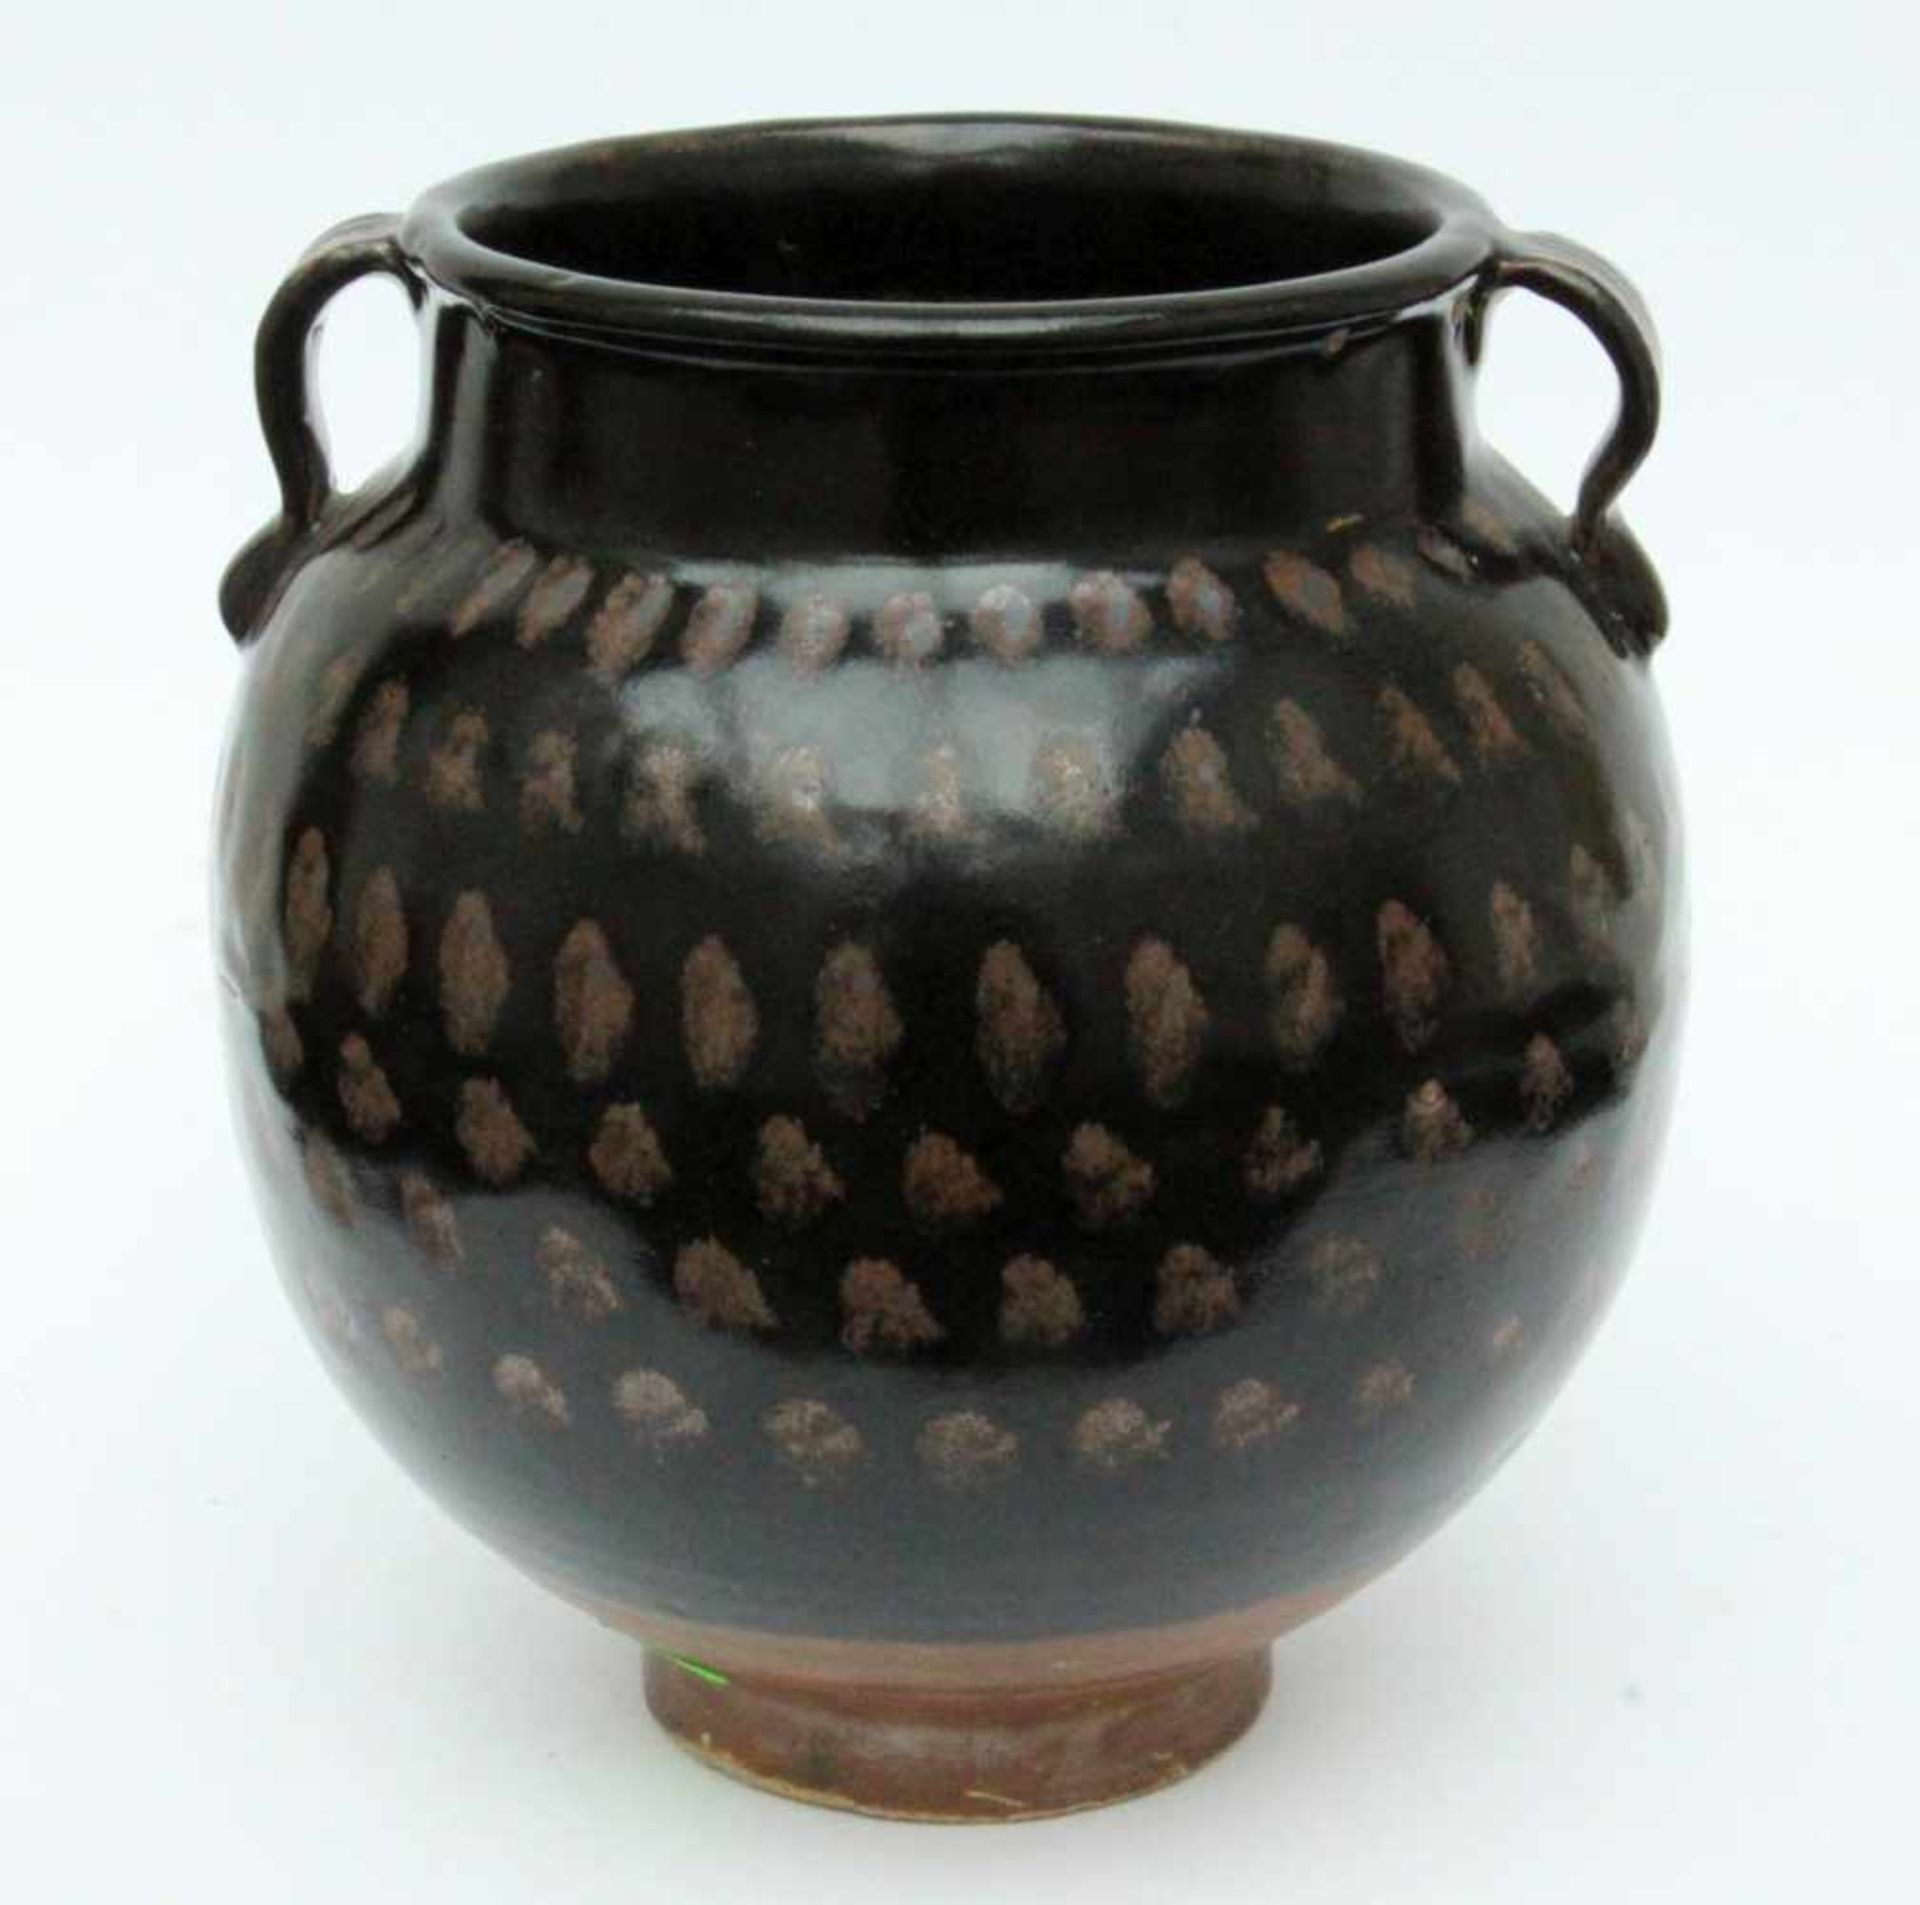 ''A HENAN CERAMIC VASE China, probably Song dynasty Elegant handled vase with oil spot